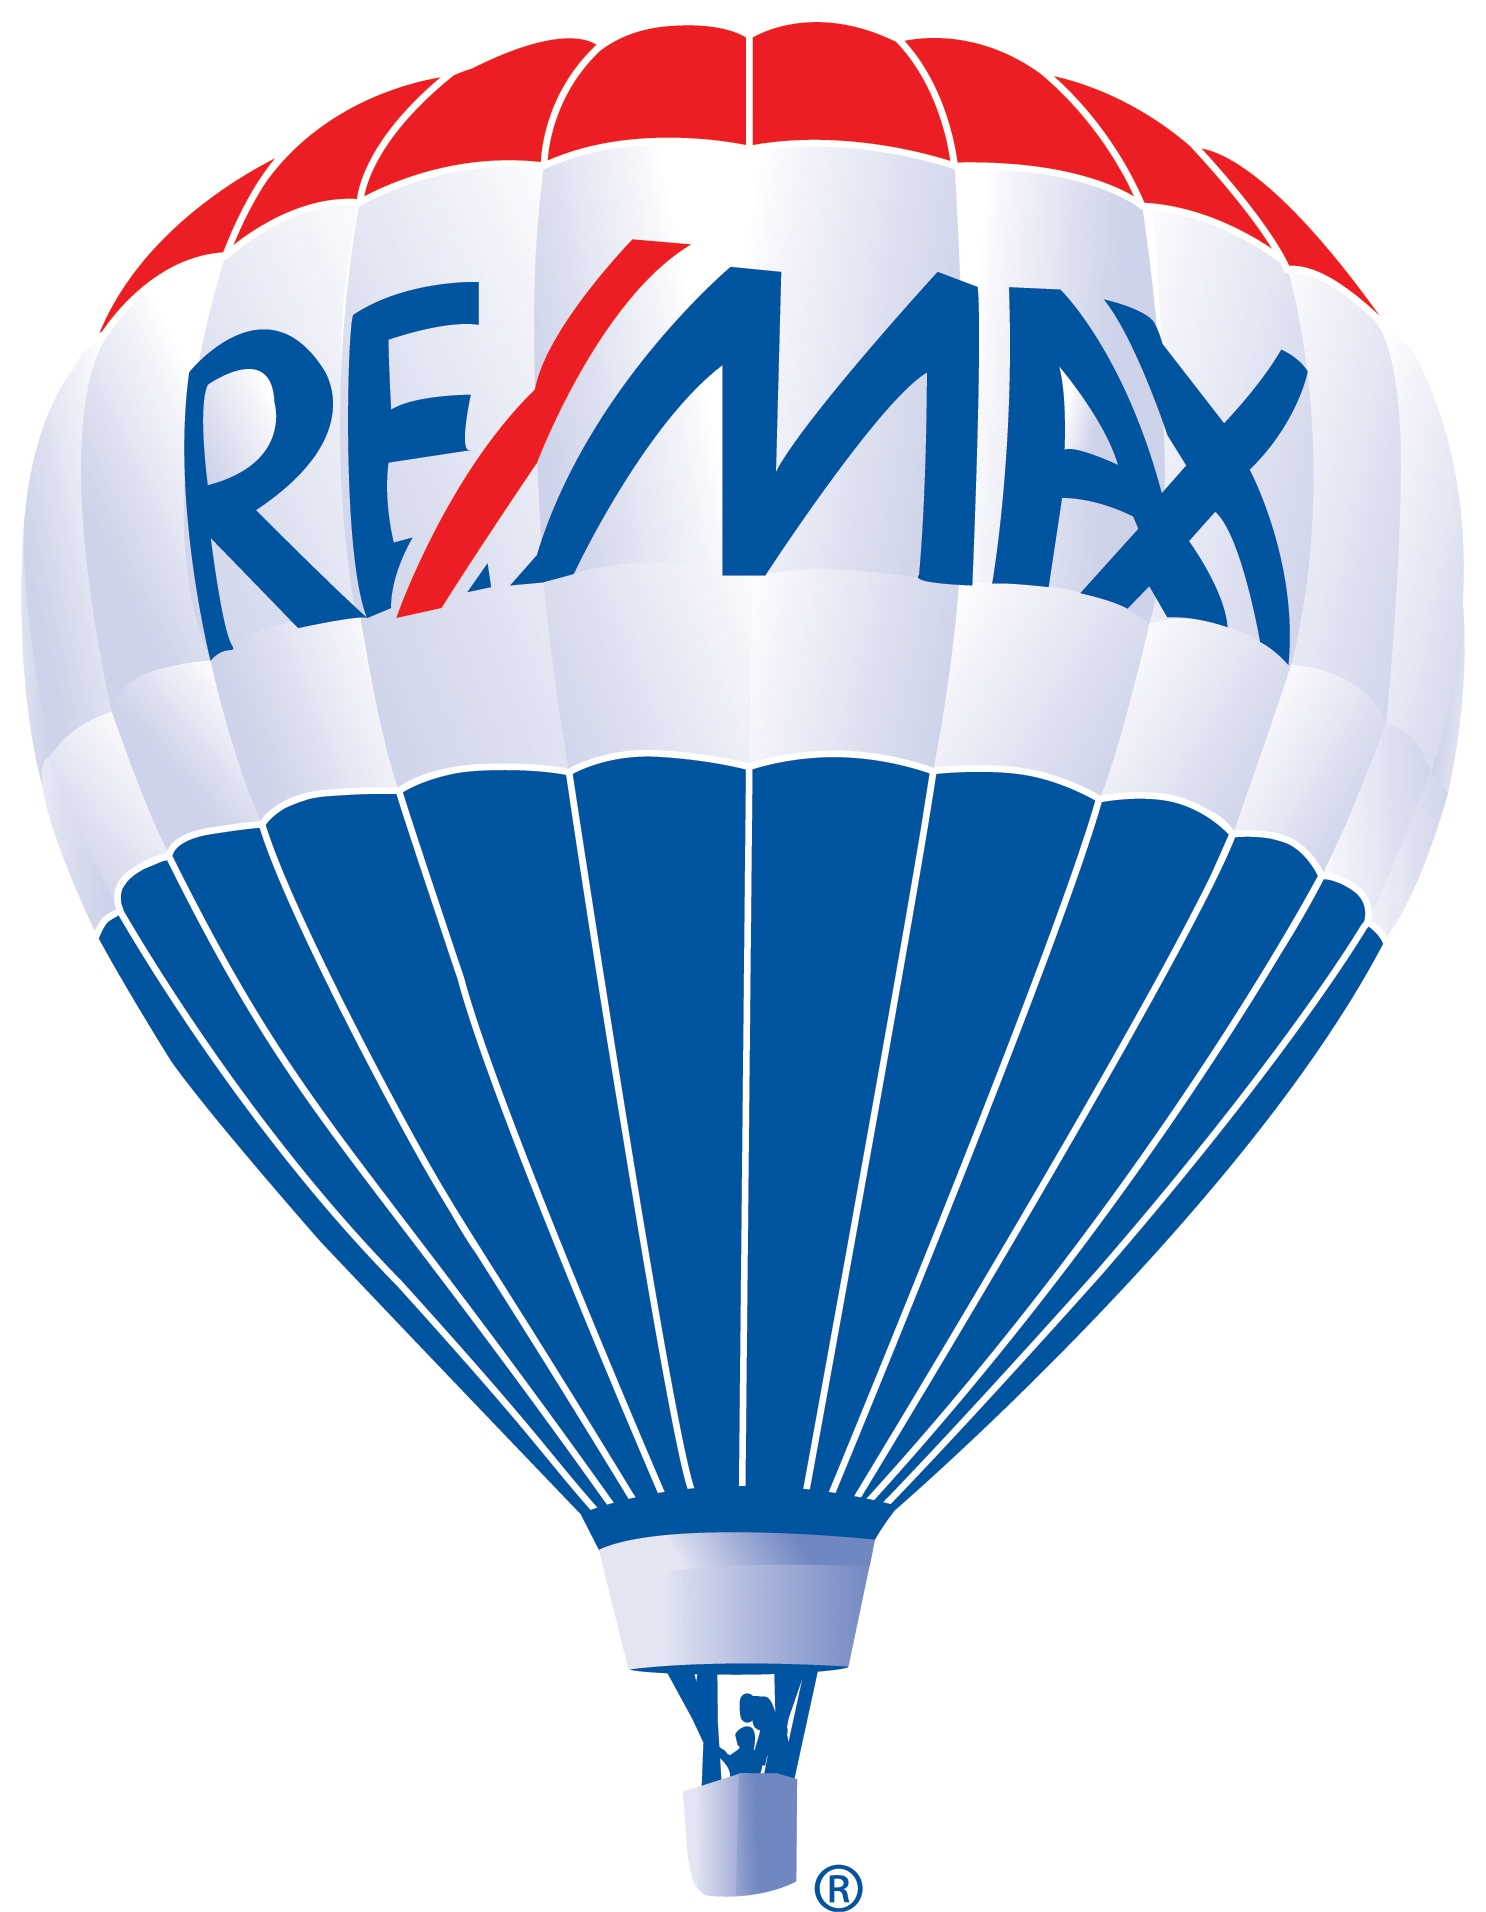 RE/MAX, LLC. logo